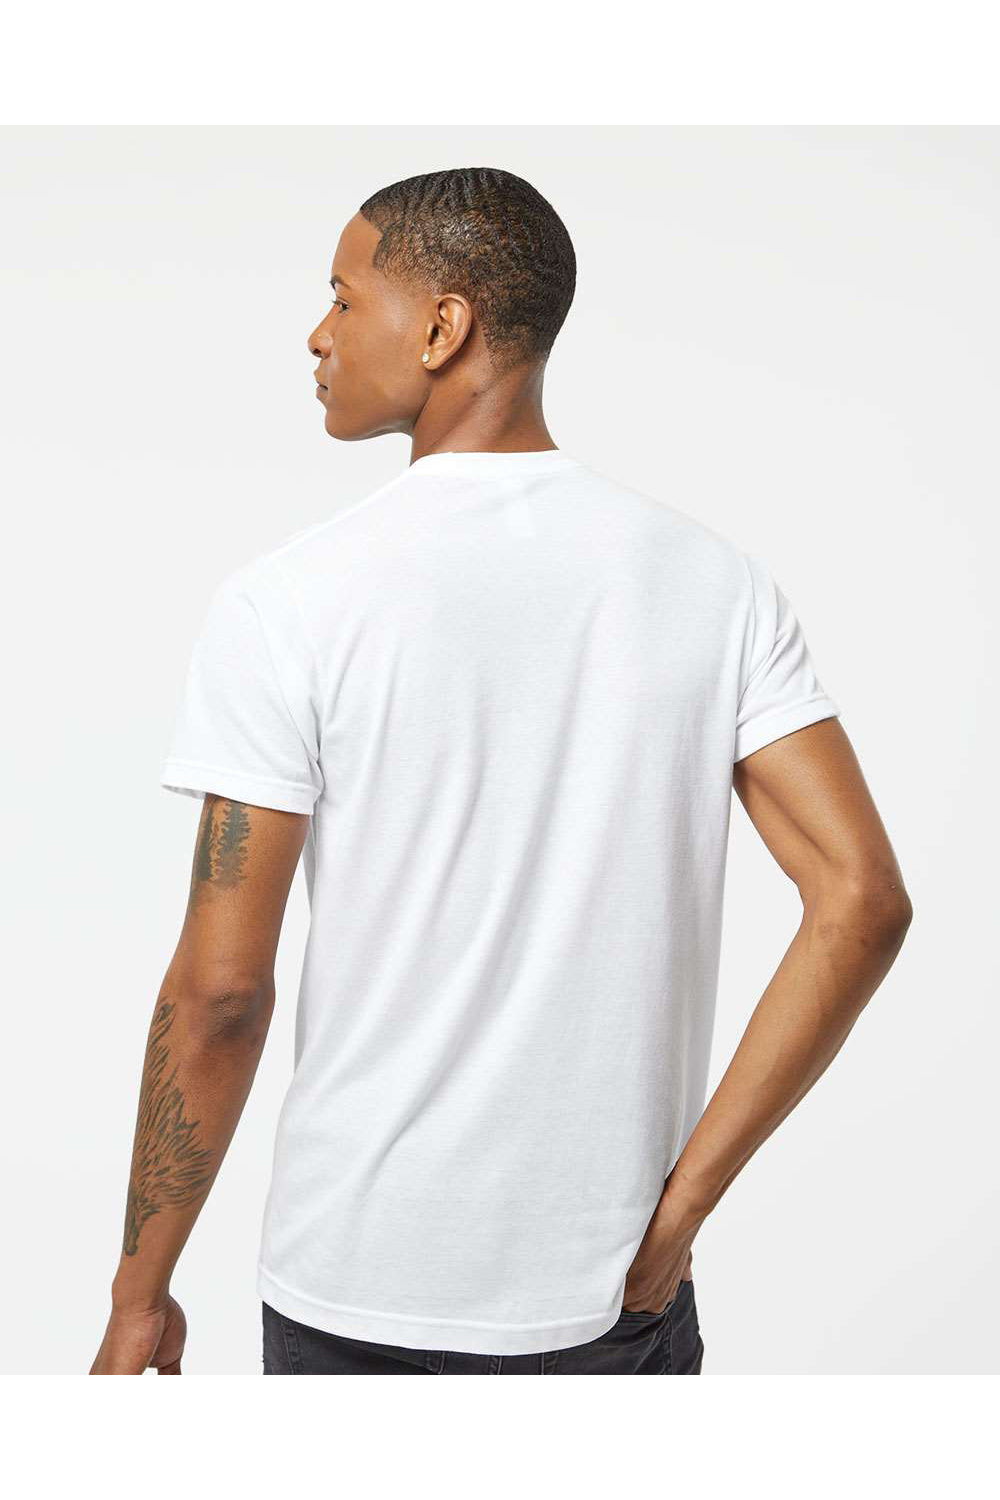 Tultex 241 Mens Poly-Rich Short Sleeve Crewneck T-Shirt White Model Back